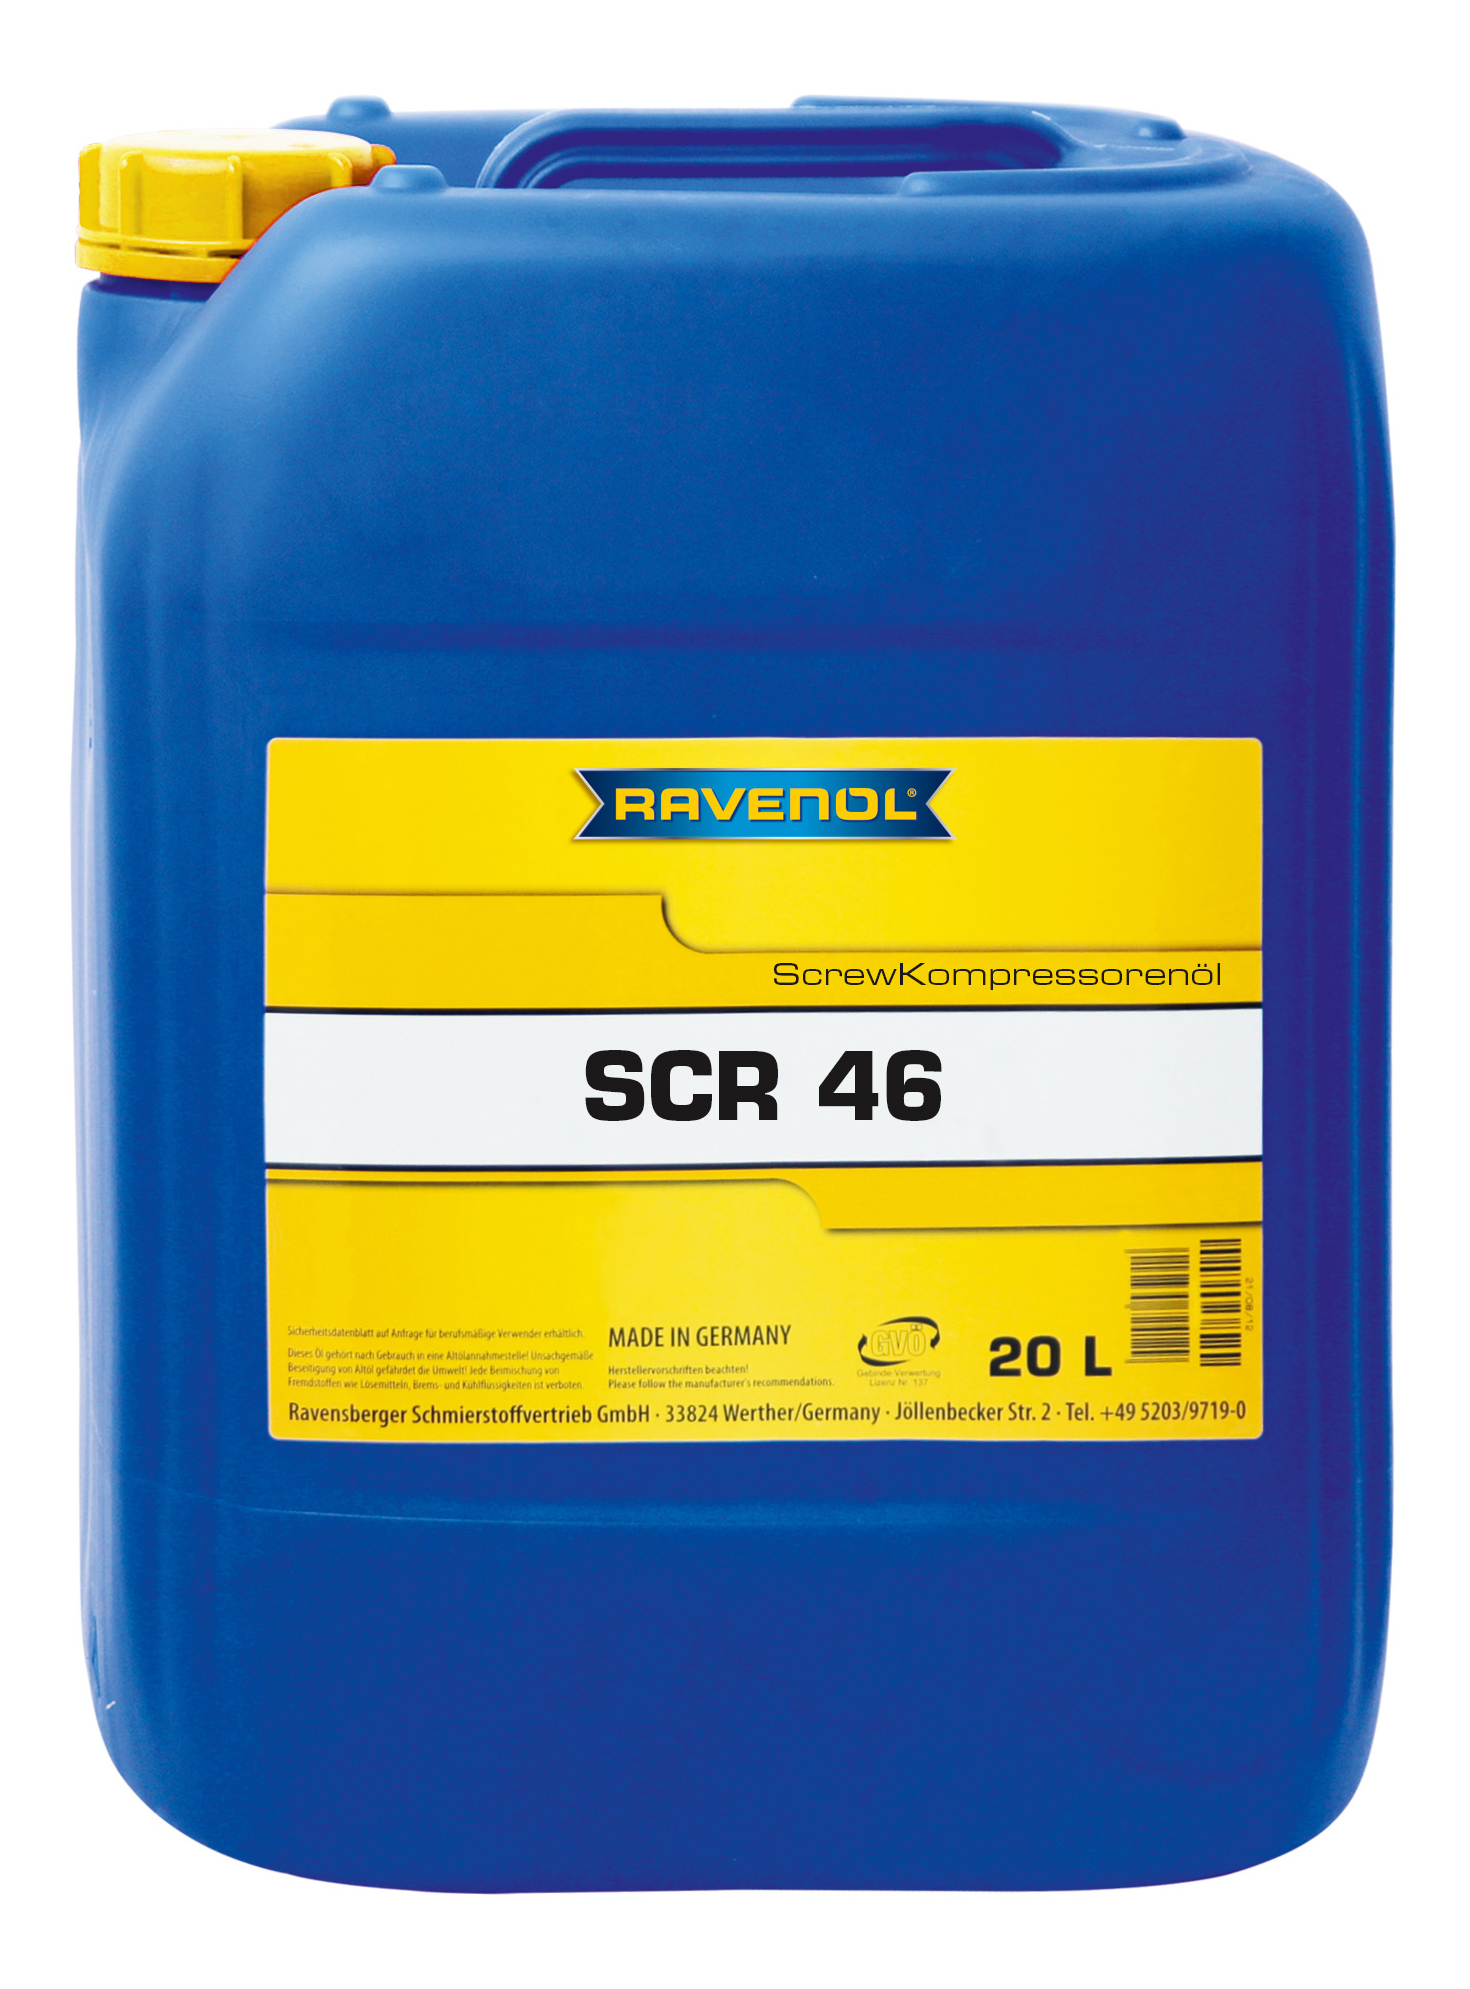 Компрессорное масло RAVENOL Kompressorenoel Screew SCR 46 20л 1330305-020-01-999